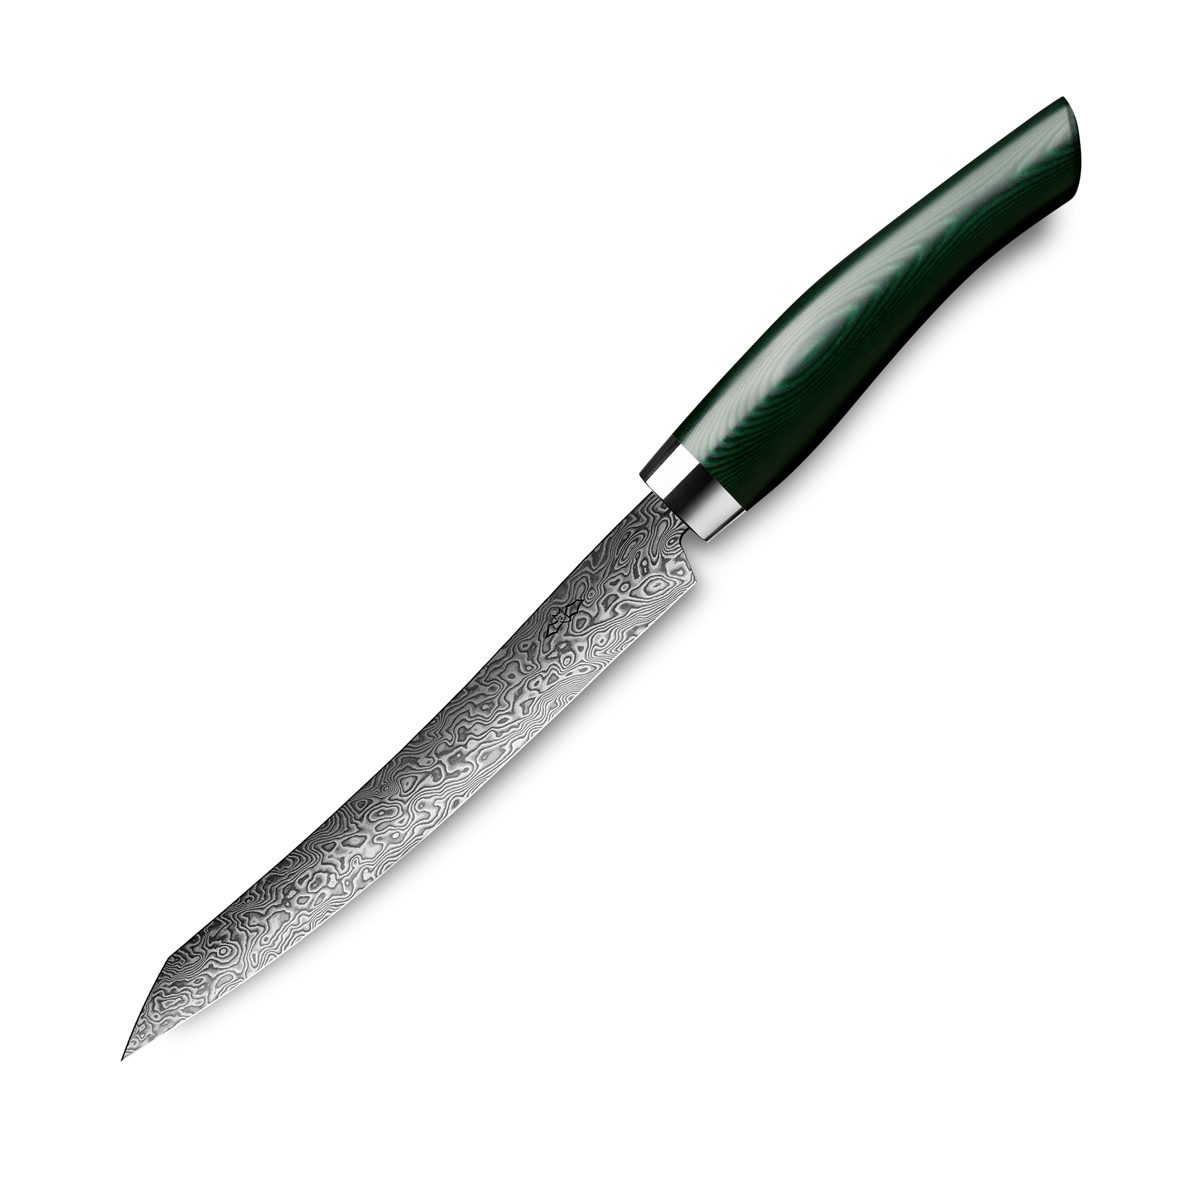 Nesmuk Exklusiv C 90 Damast Slicer 16 cm - Griff Micarta grün